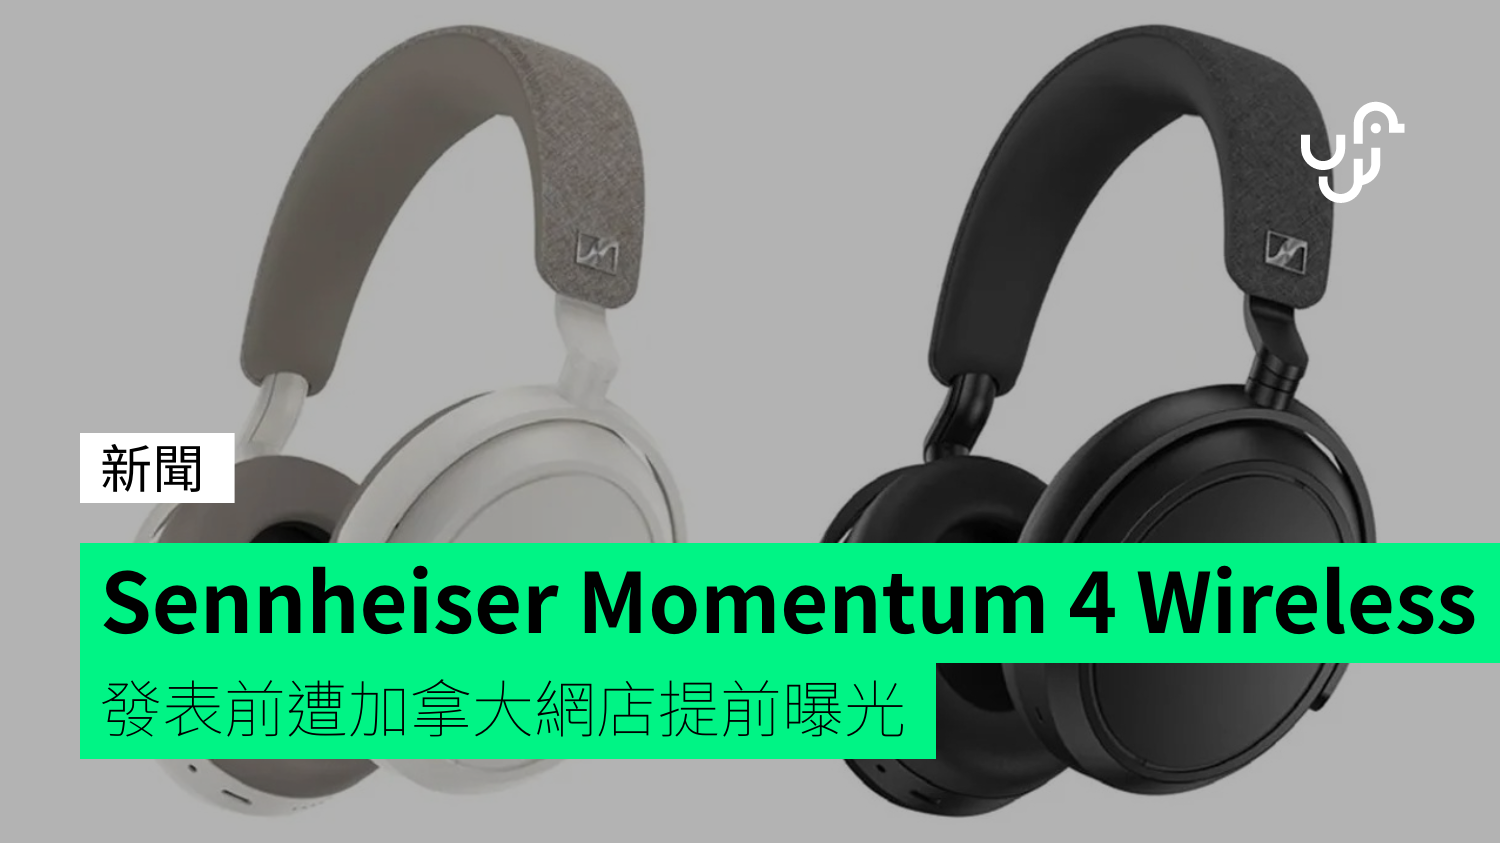 Sennheiser Momentum 4 Wireless 耳機發表前遭加拿大網店提前曝光